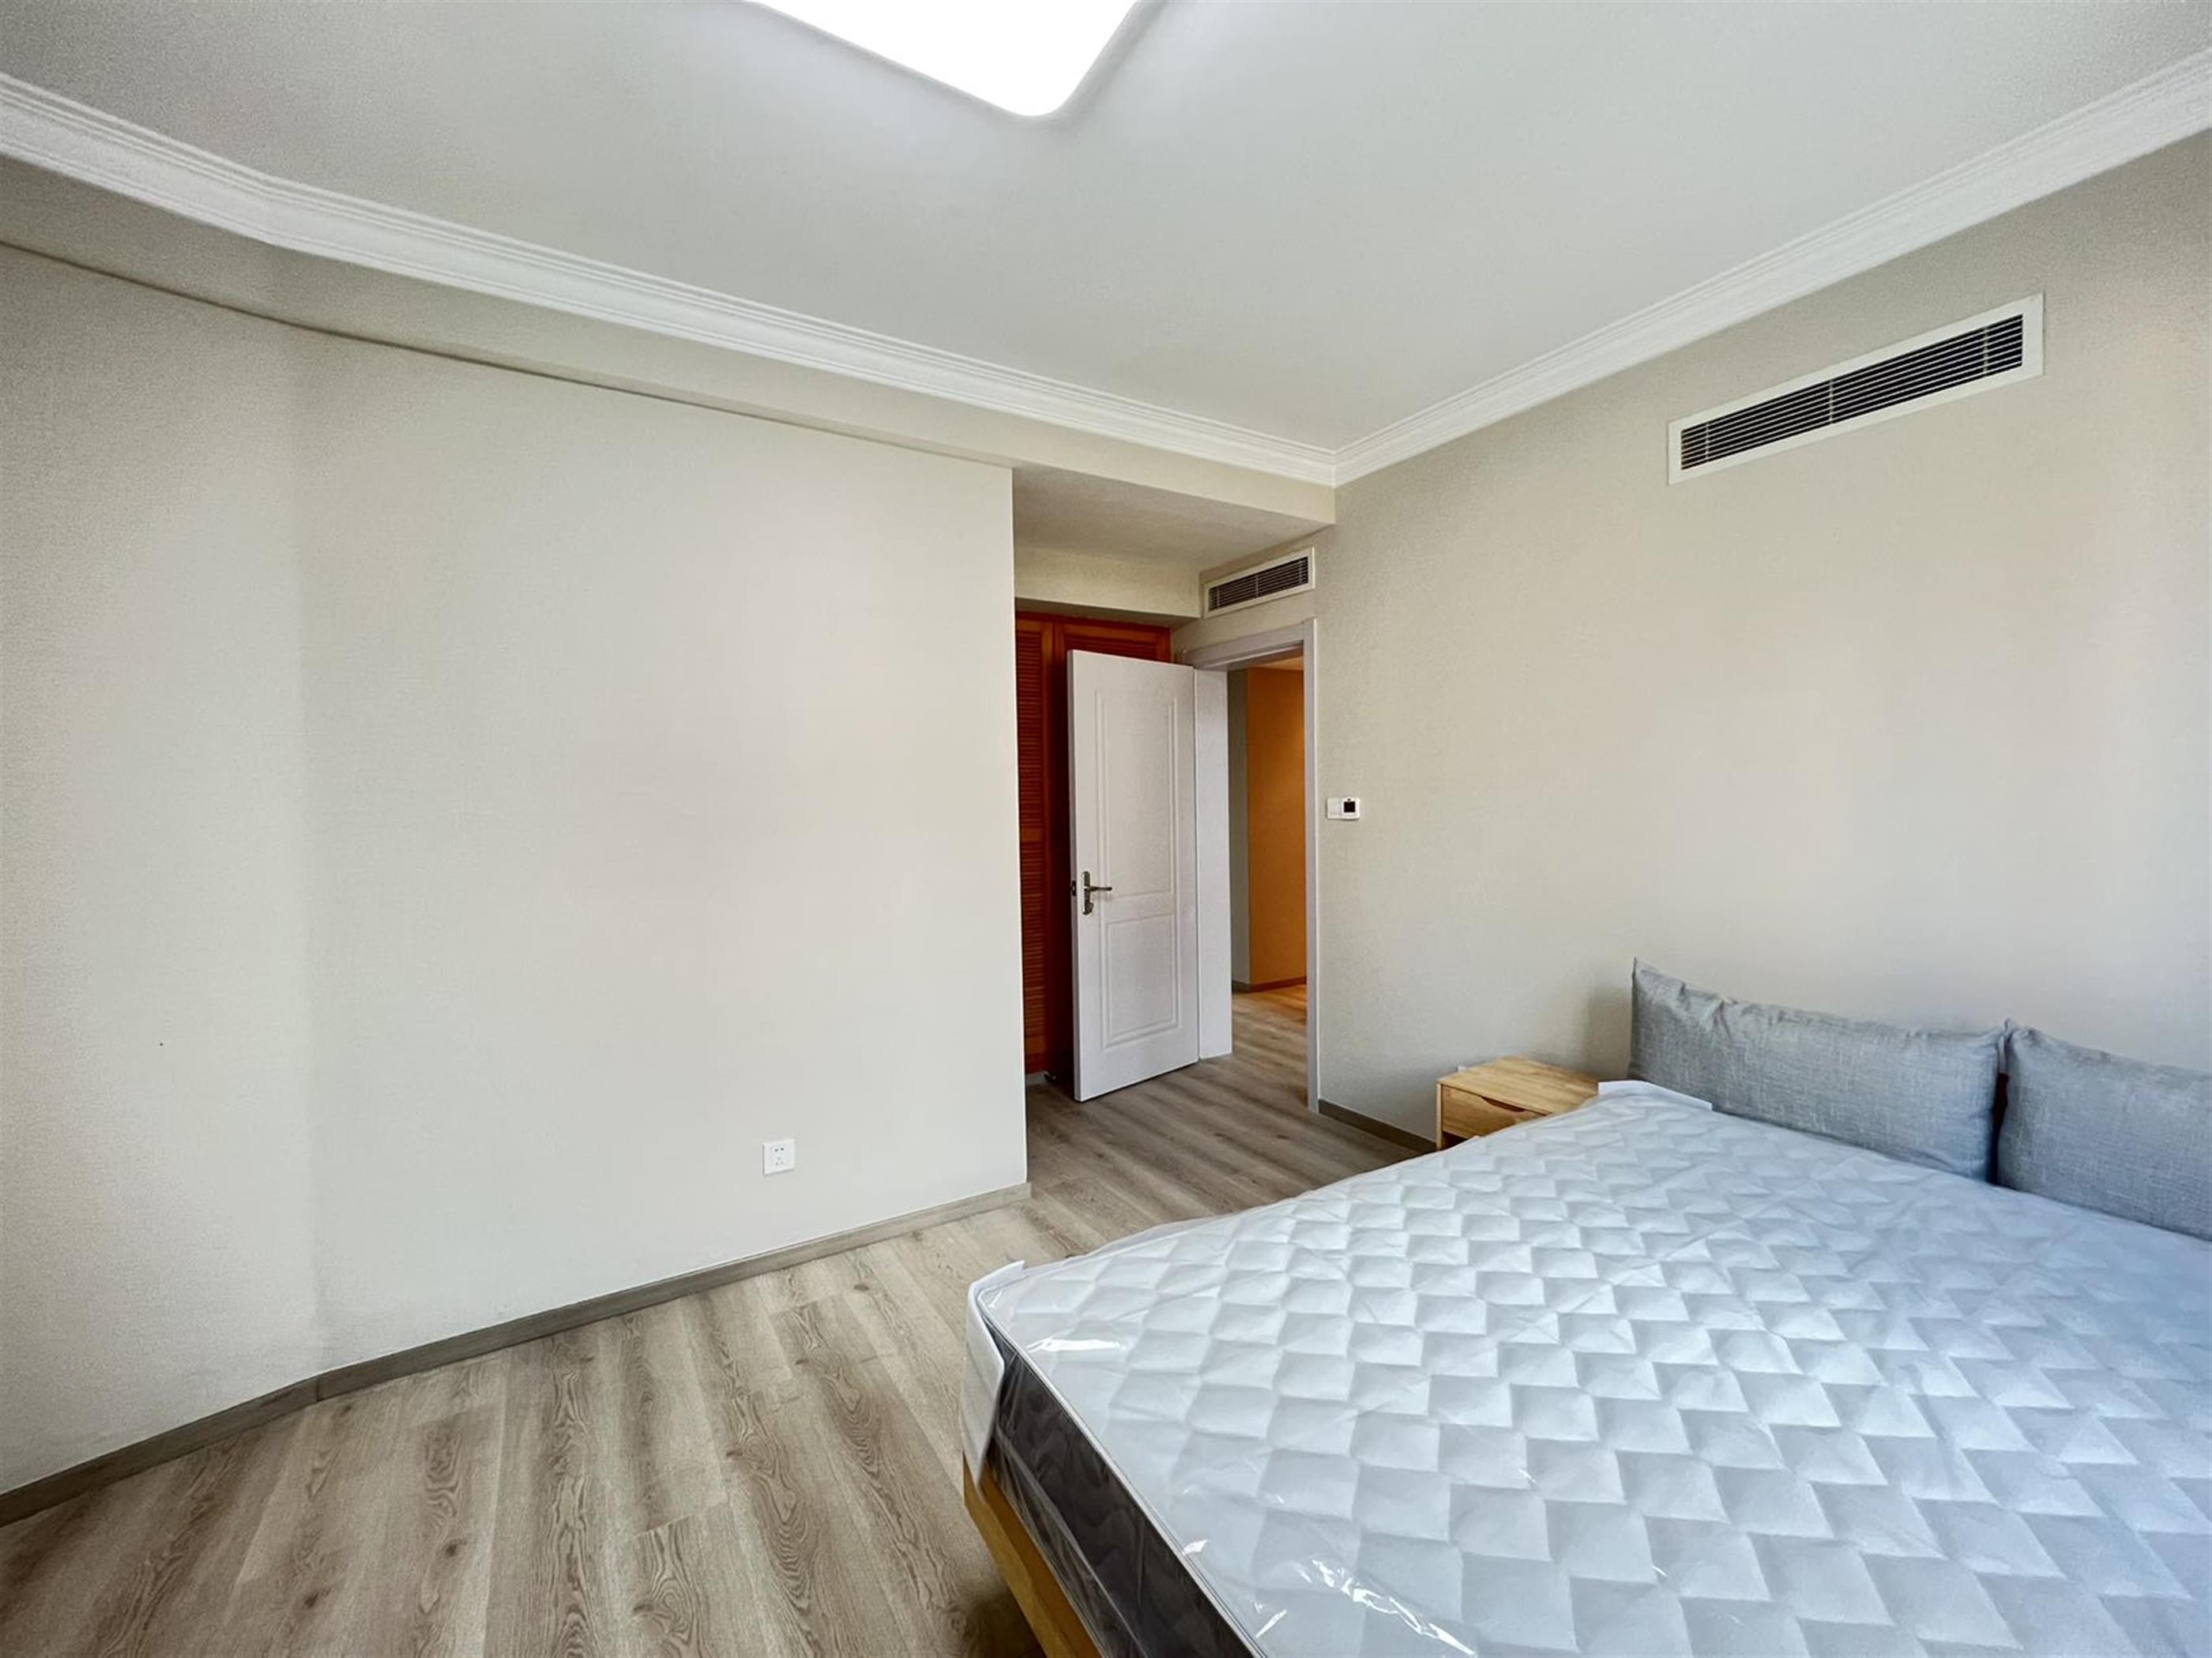 Bedroom 2 Spacious Modern 3BR for Rent in Shanghai’s LuJiaZui Yanlord Gardens